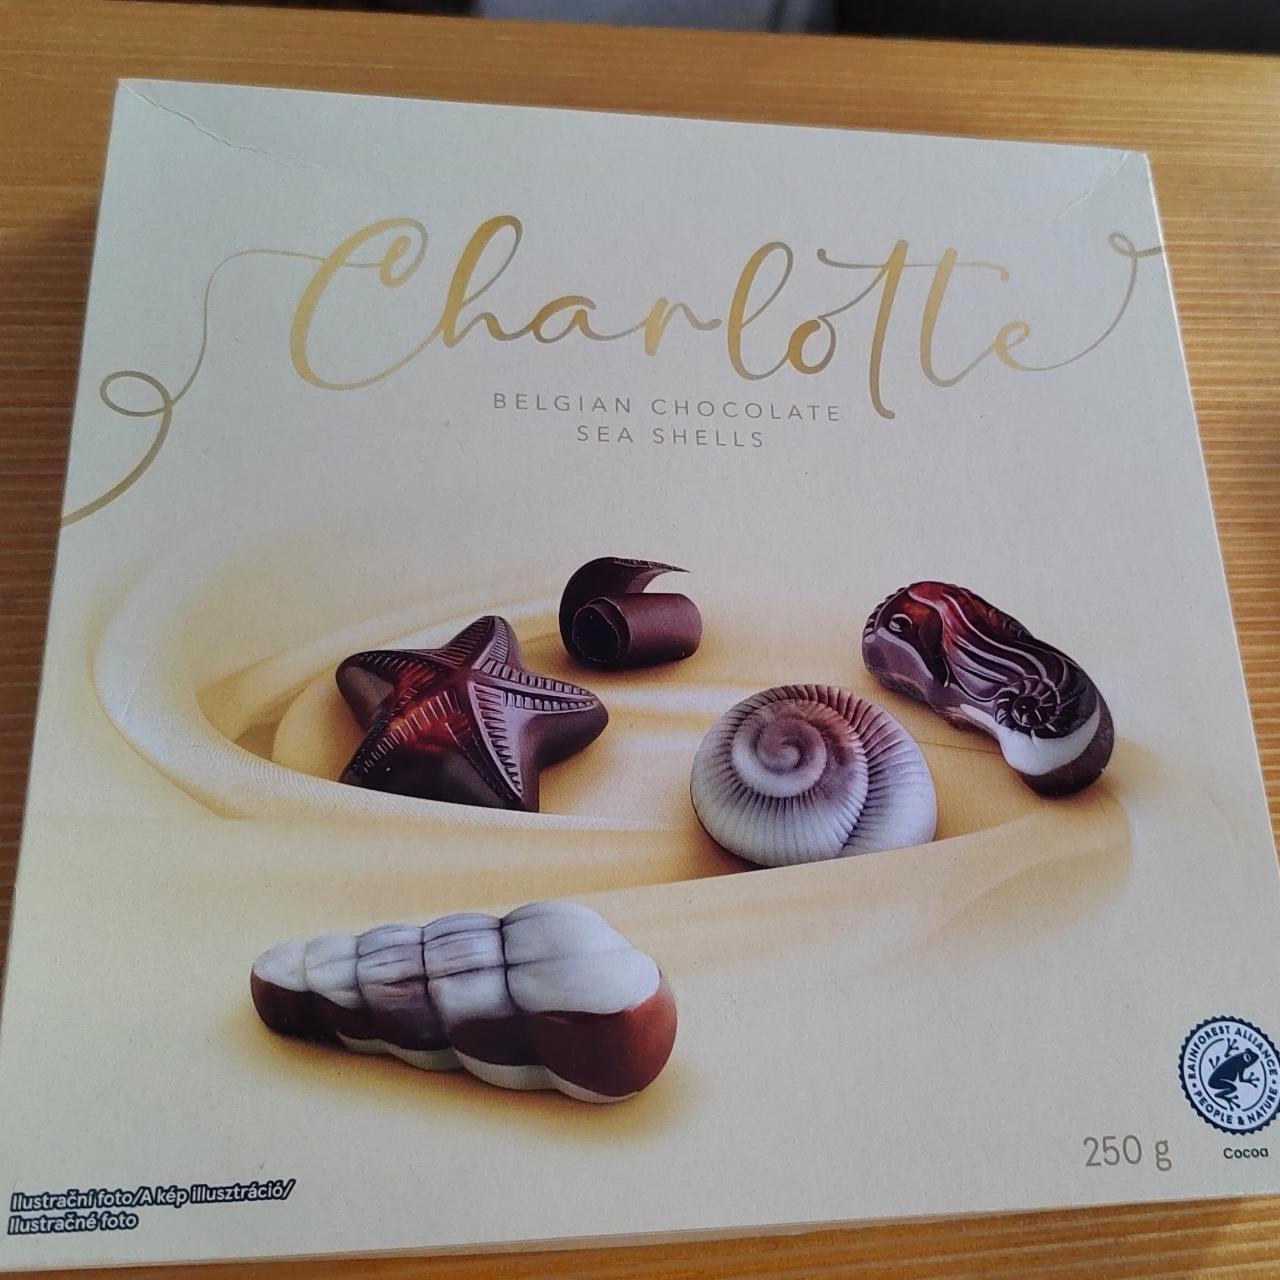 Képek - Belgian chocolate sea shells Charlotte